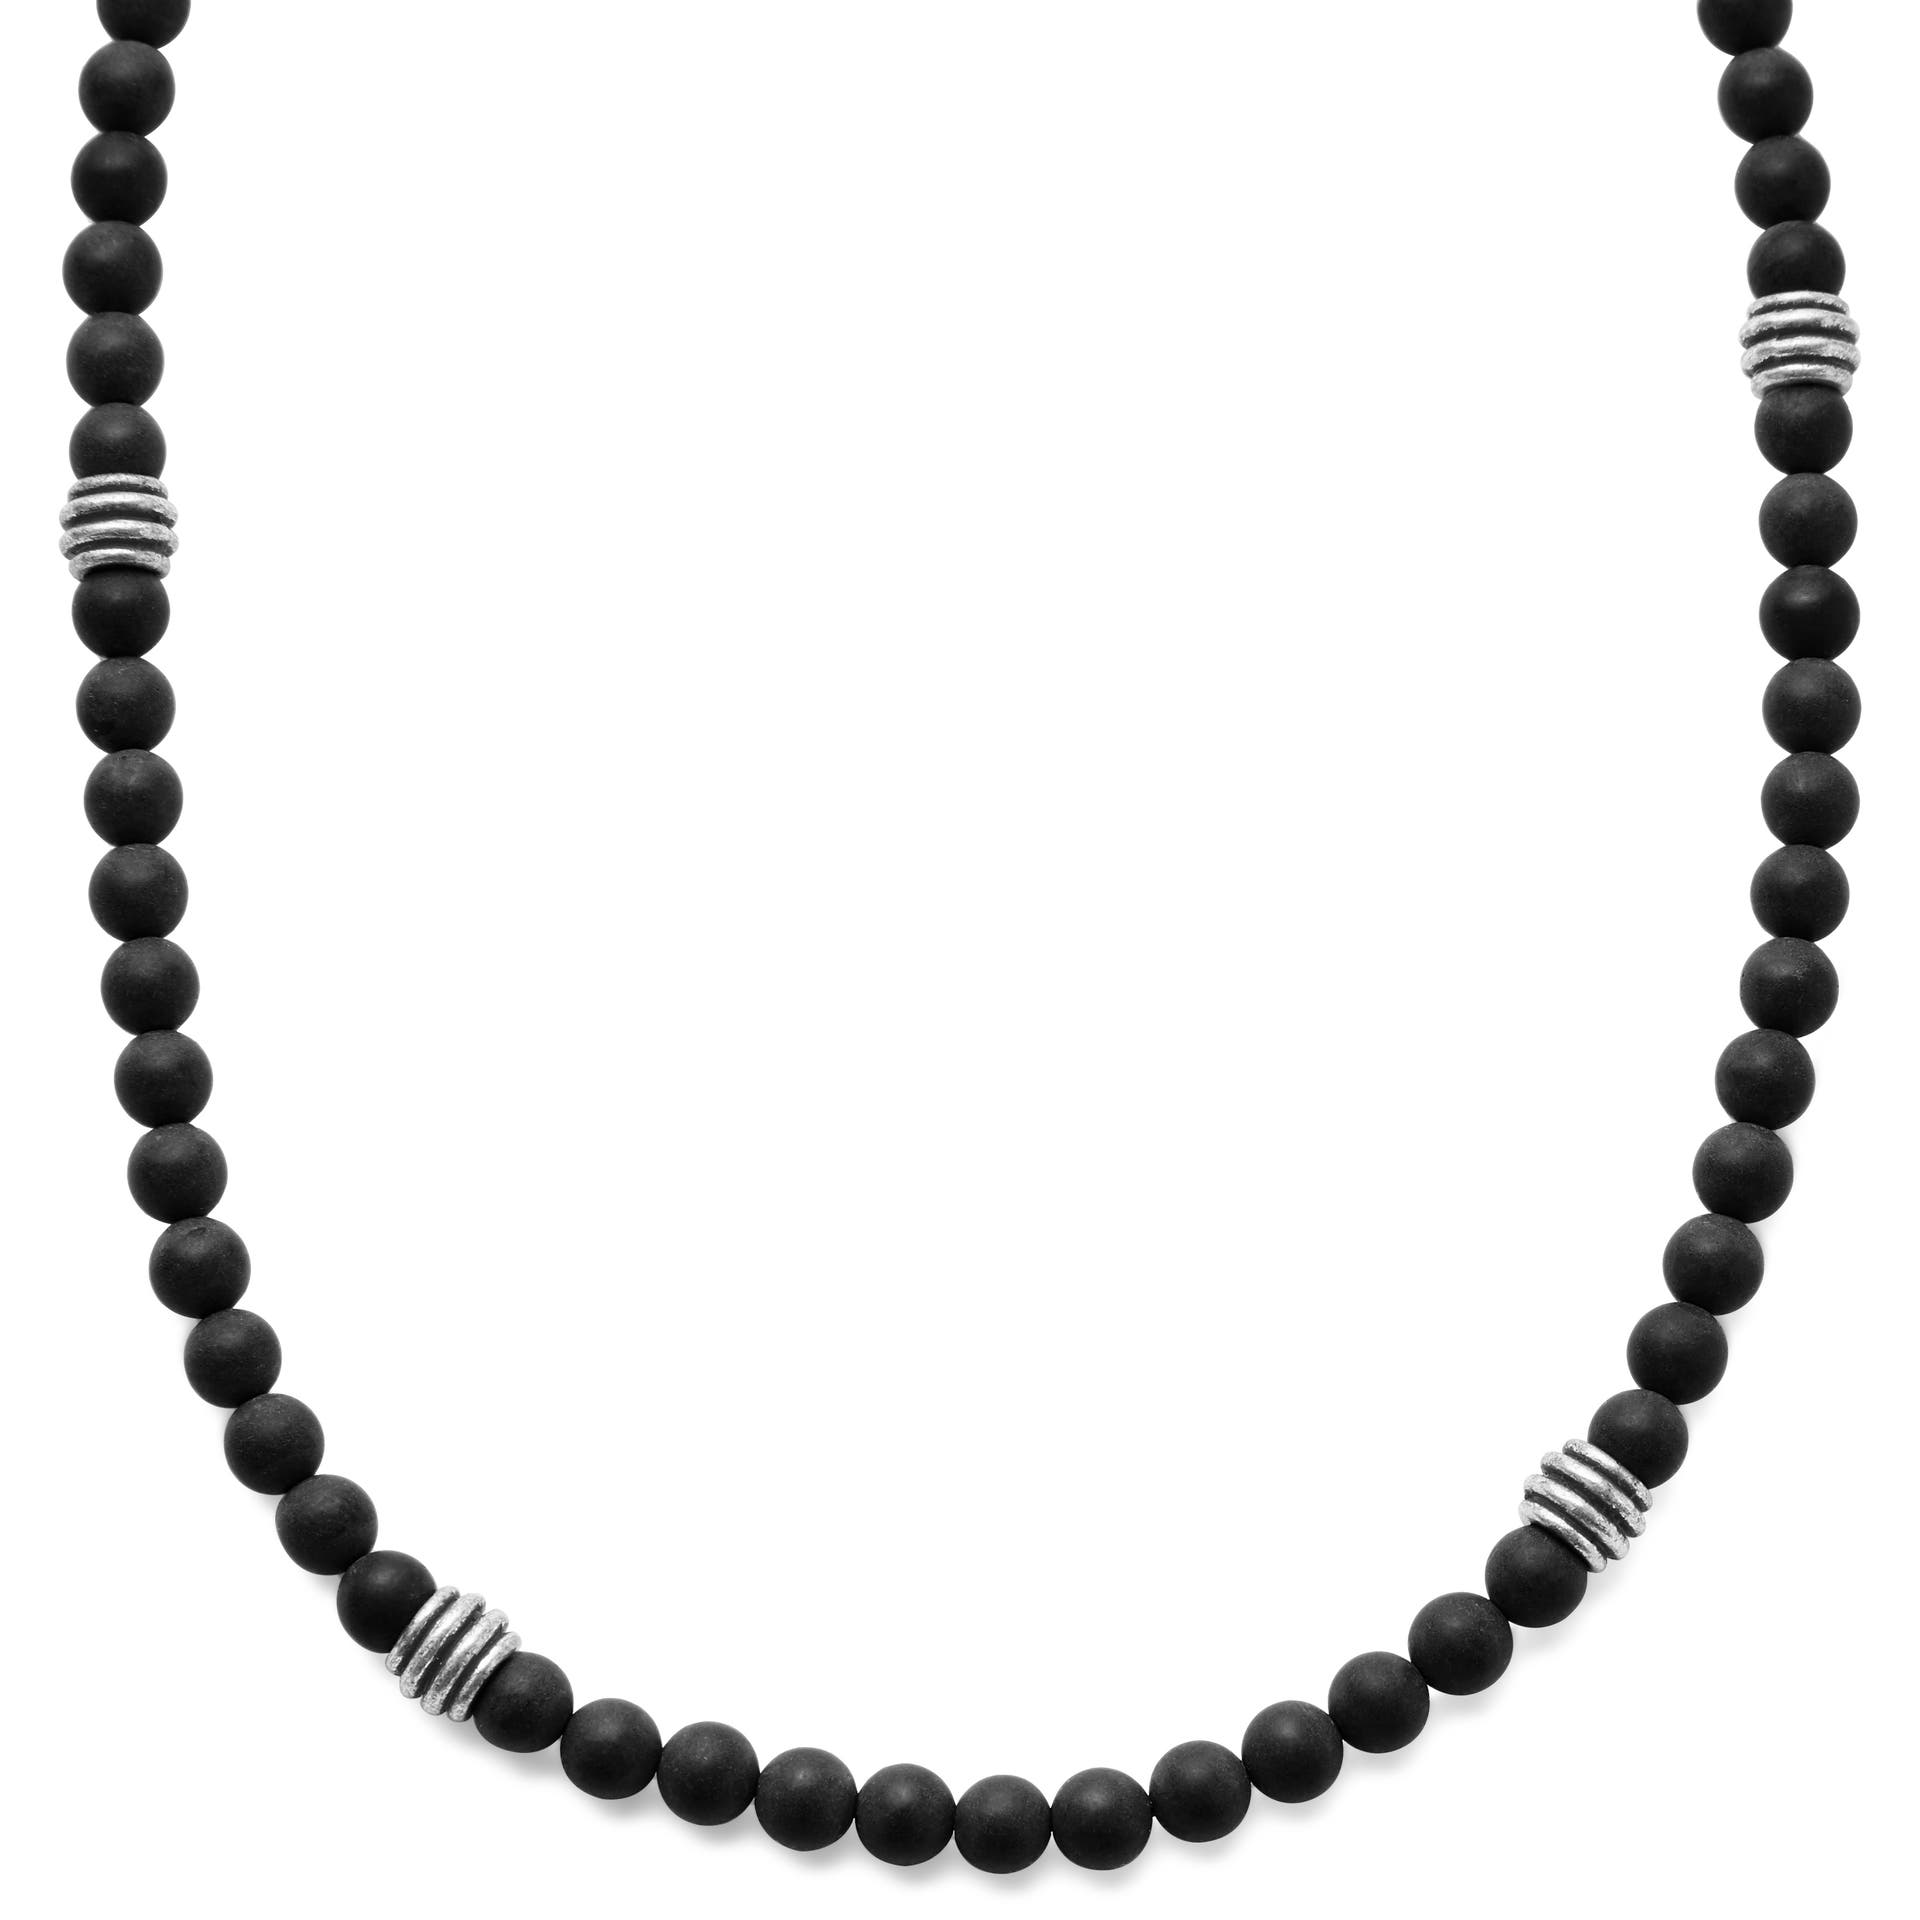 Men's necklaces | 756 Styles for men in stock